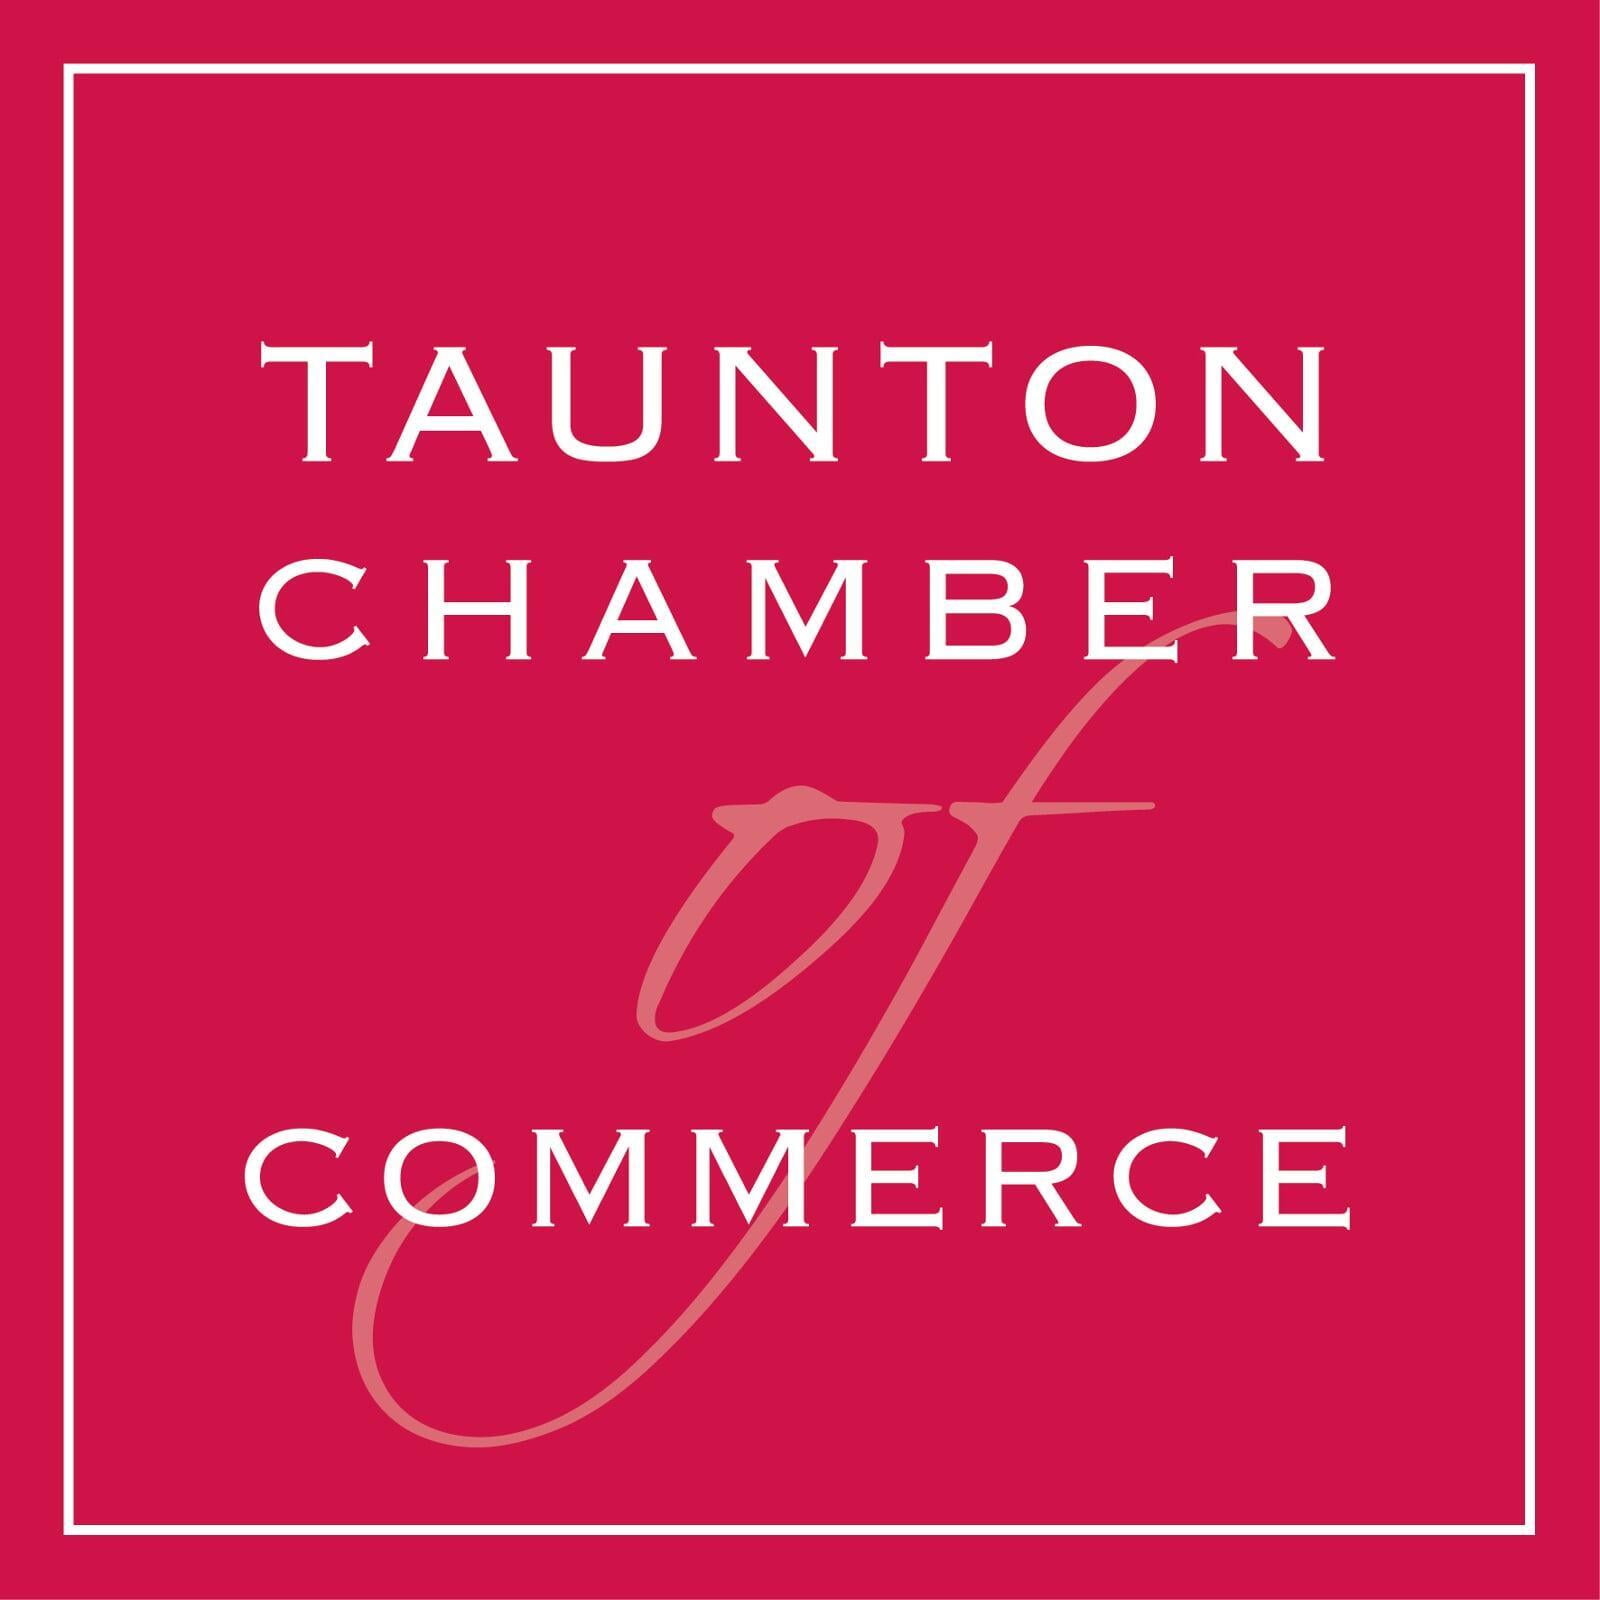 Taunton Chamber of Commerce logo